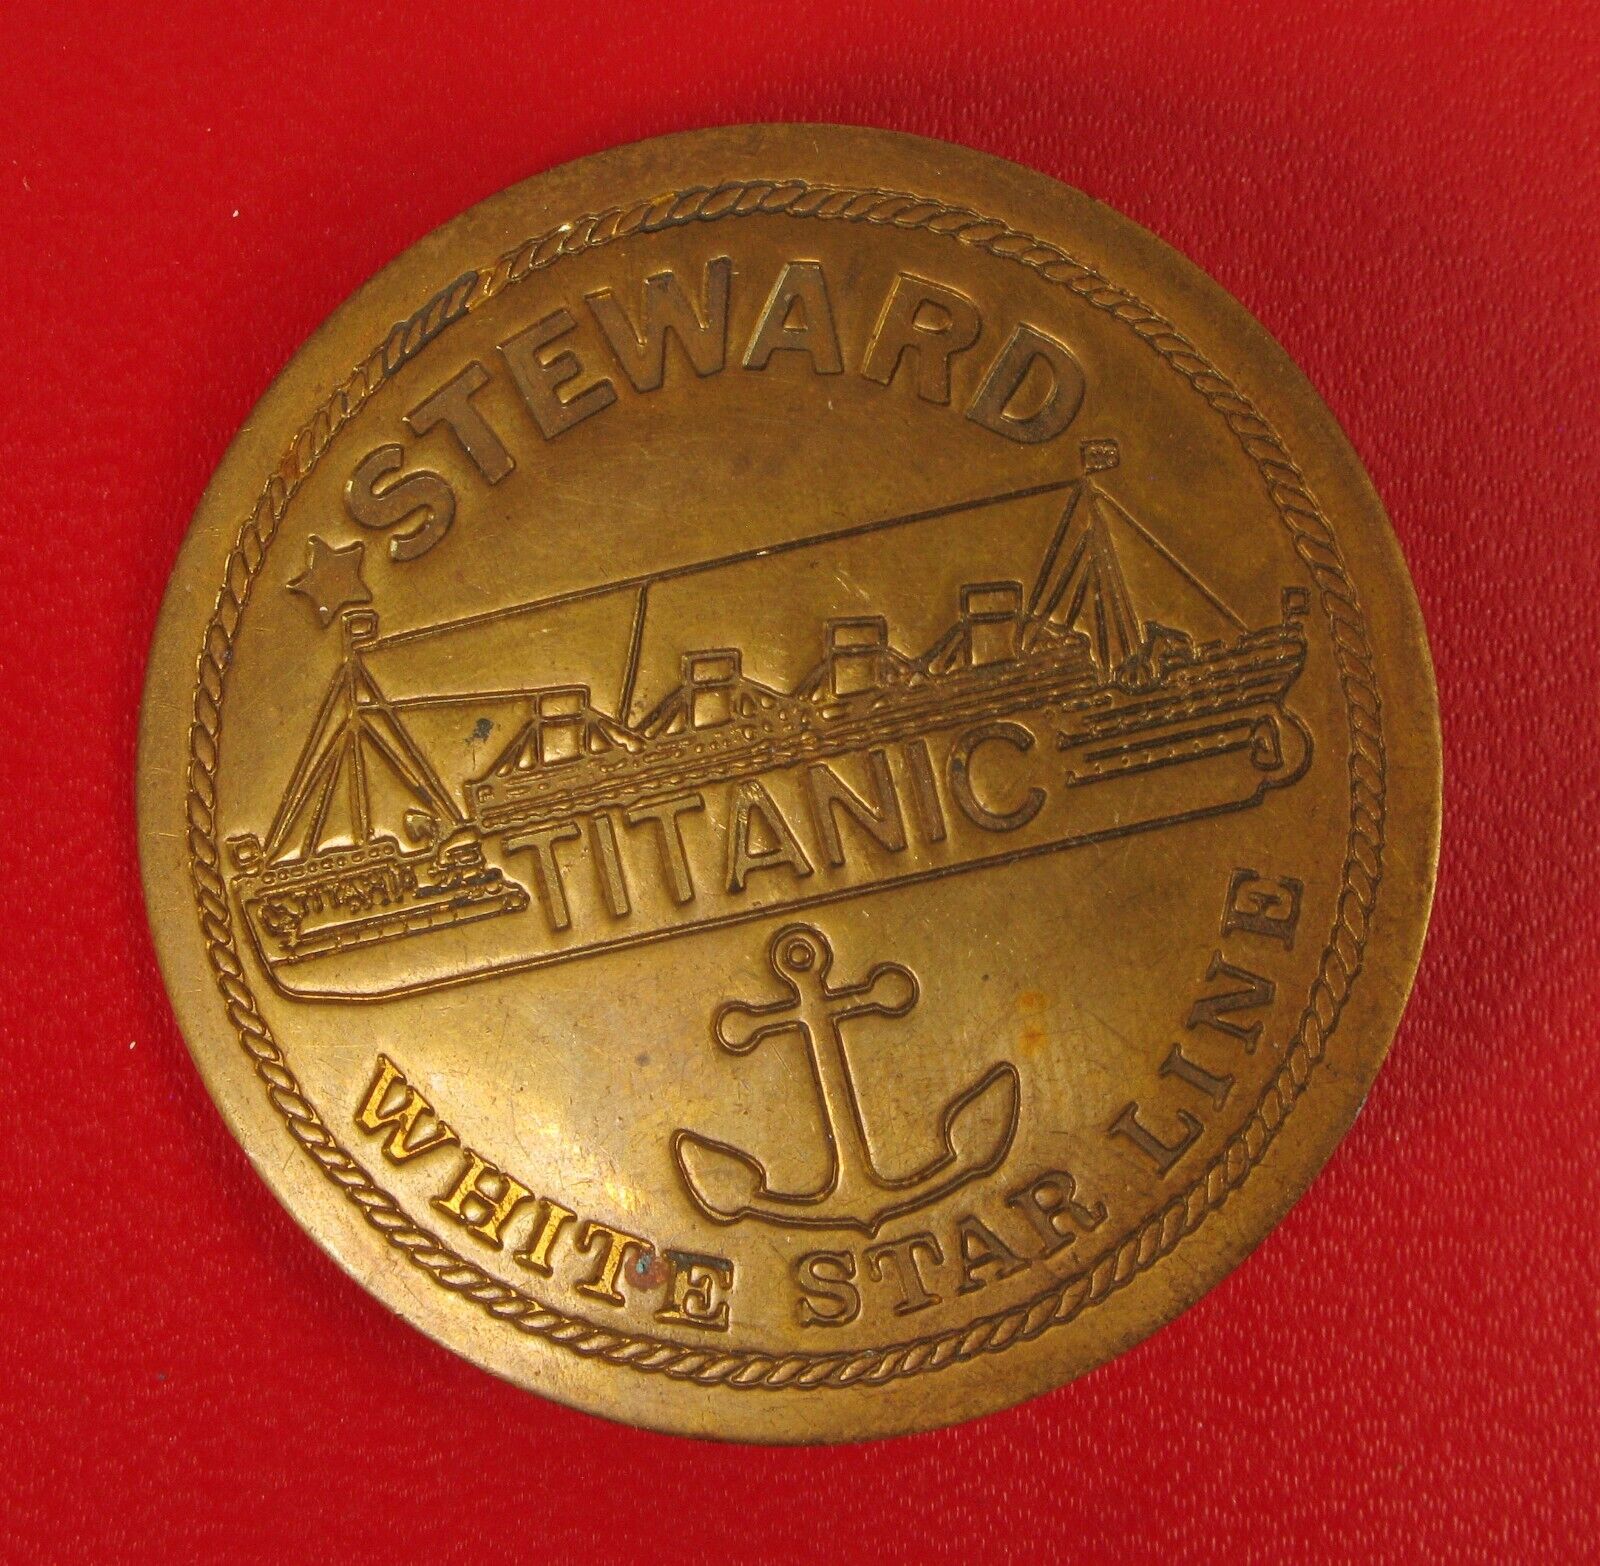 FANTASY BADGE RMS TITANIC STEWARD WHITE STAR LINE BRASS FANTASY BADGE BUTTON PIN